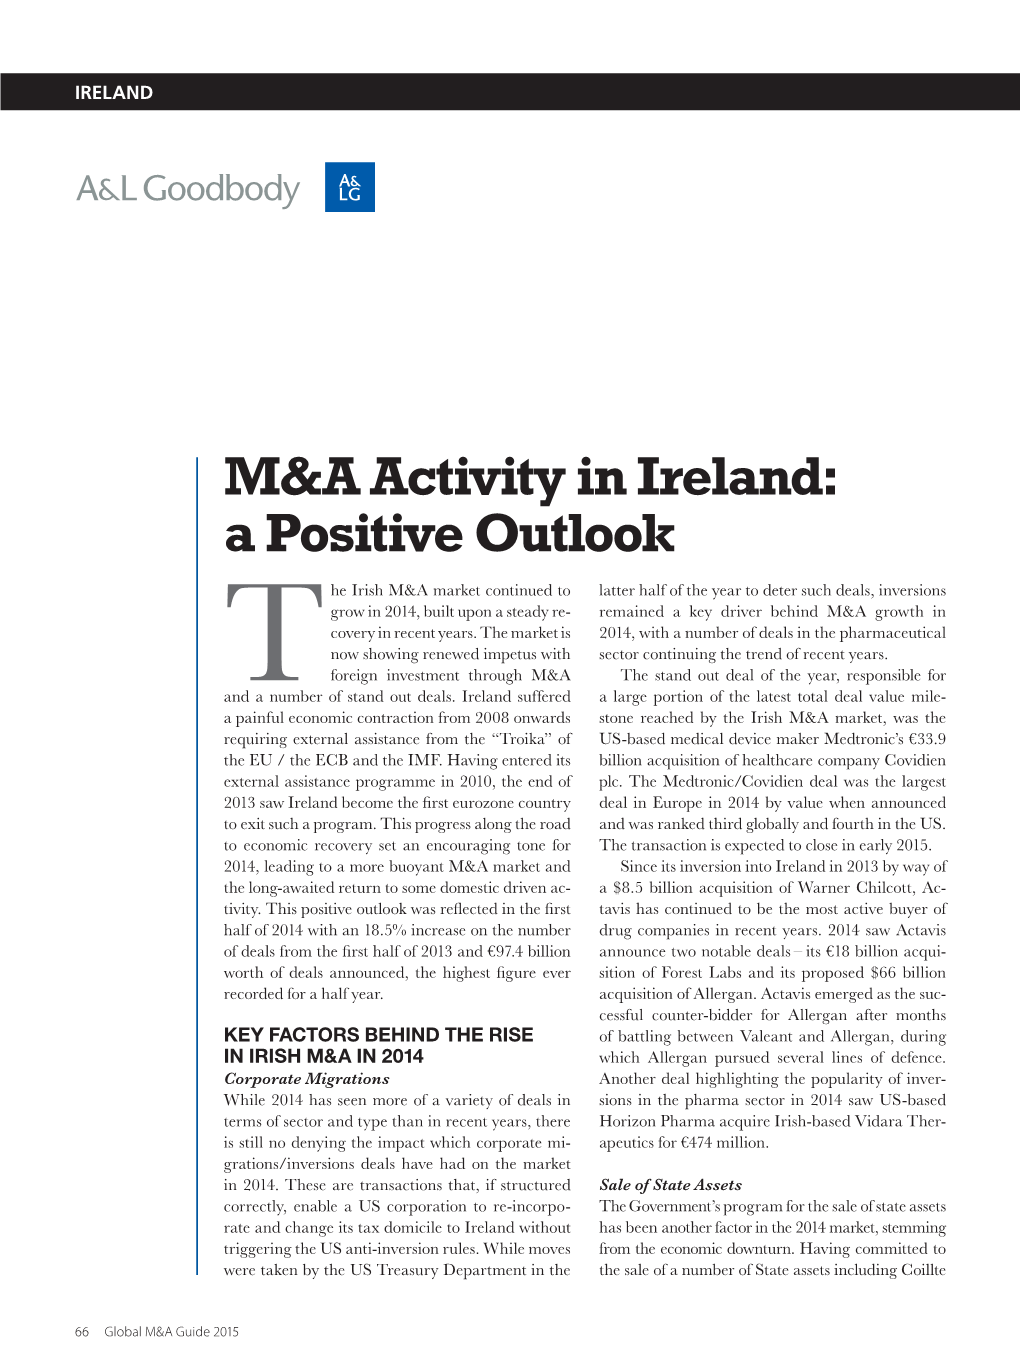 M&A Activity in Ireland